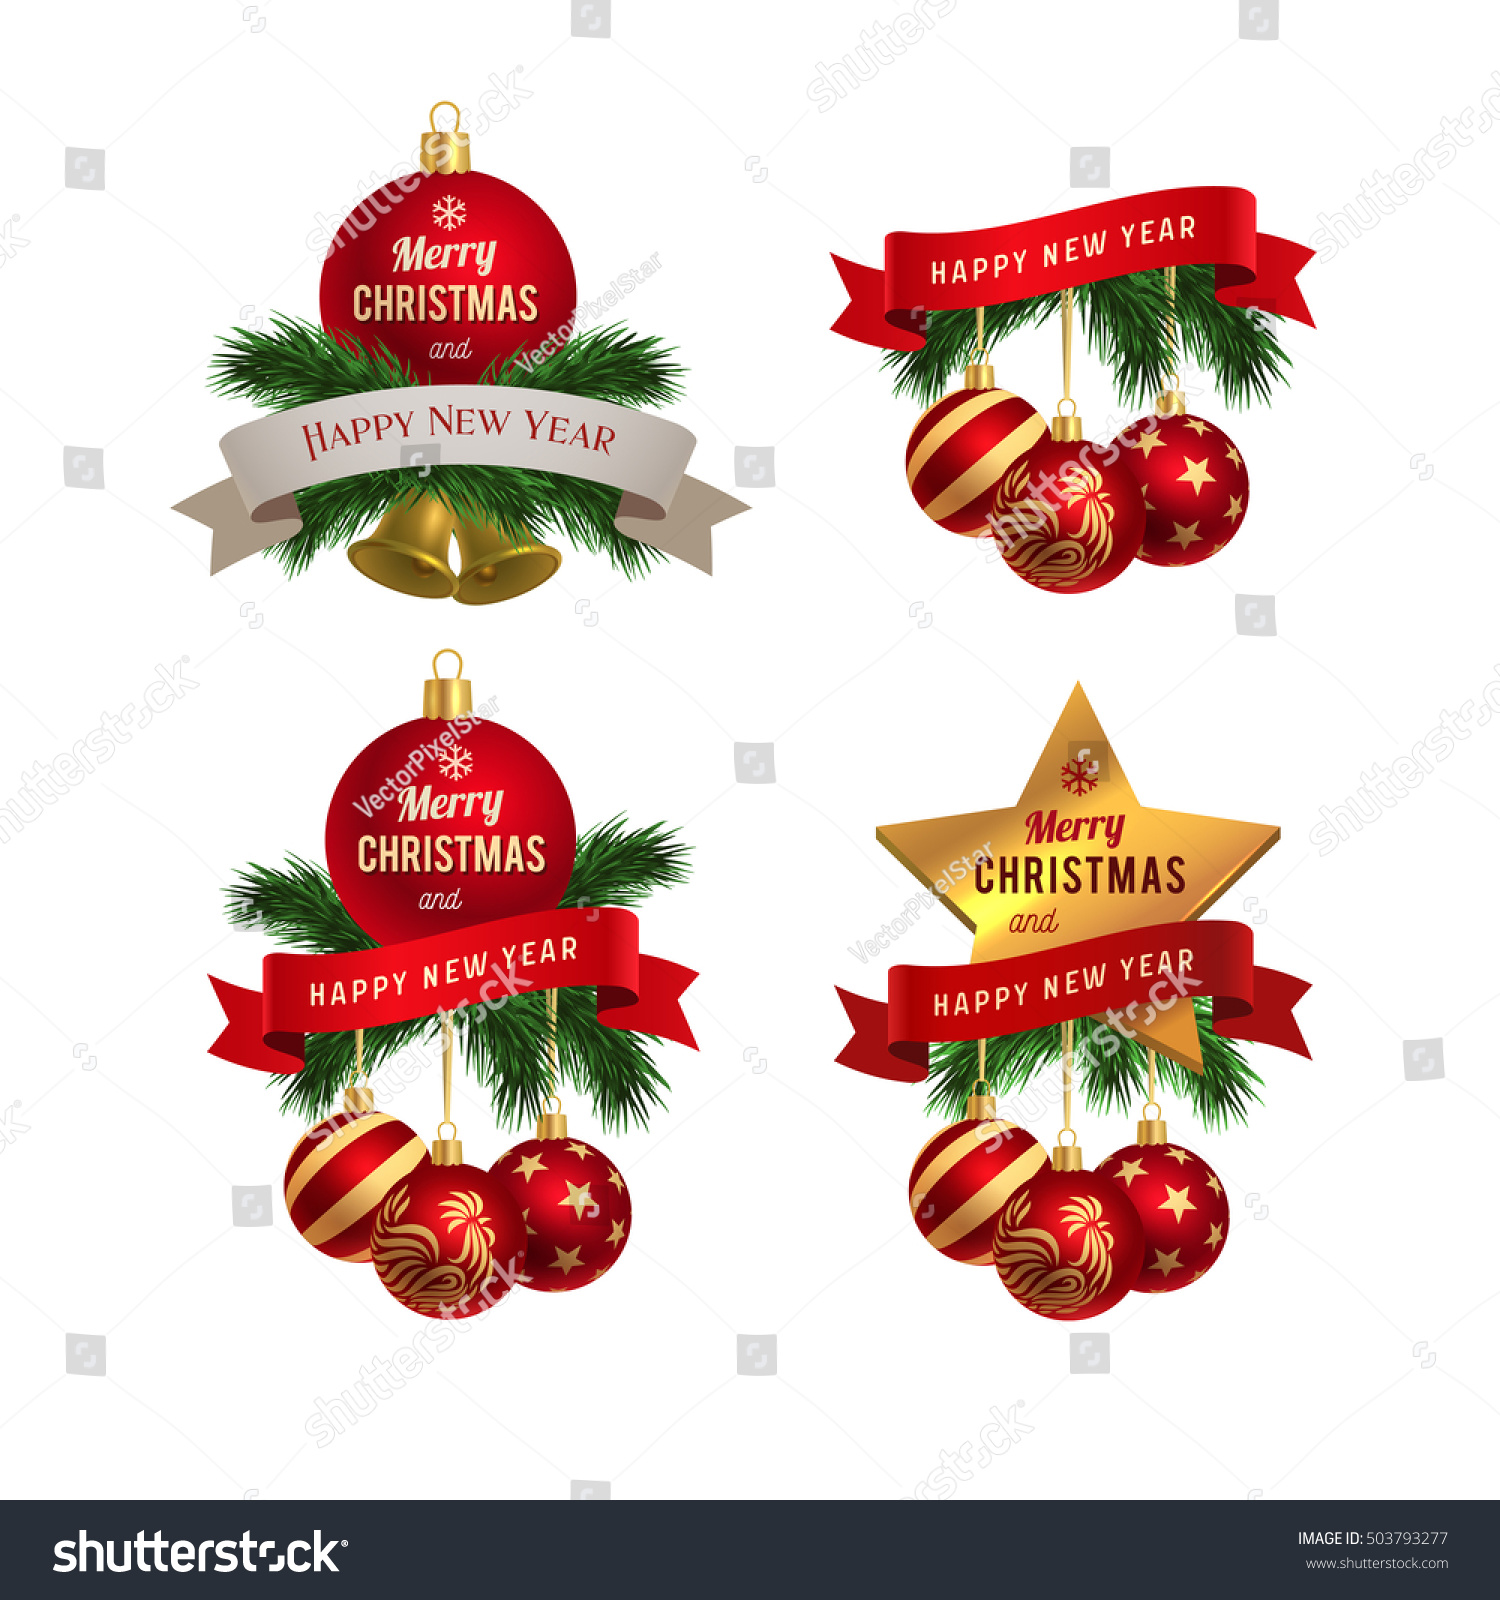 Merry Christmas Happy New Year 2017 Stock Vector 503793277 - Shutterstock